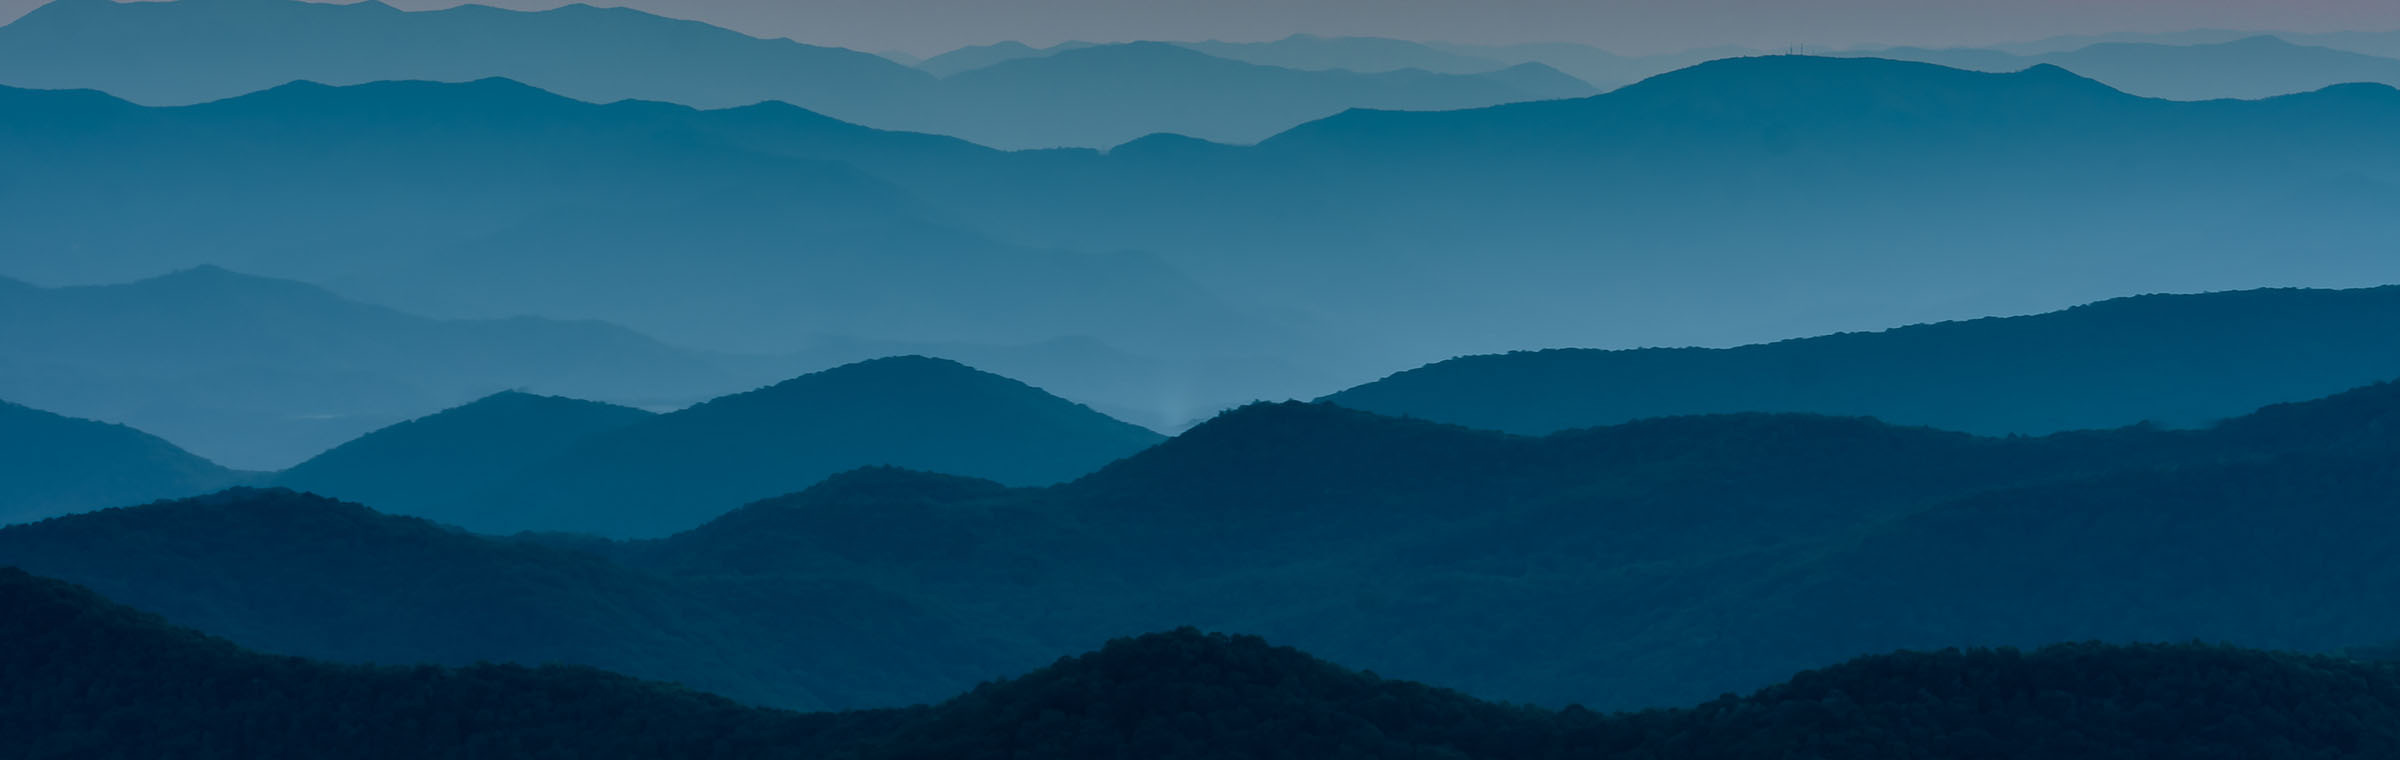 ridgeline of the Blue Ridge Mountains